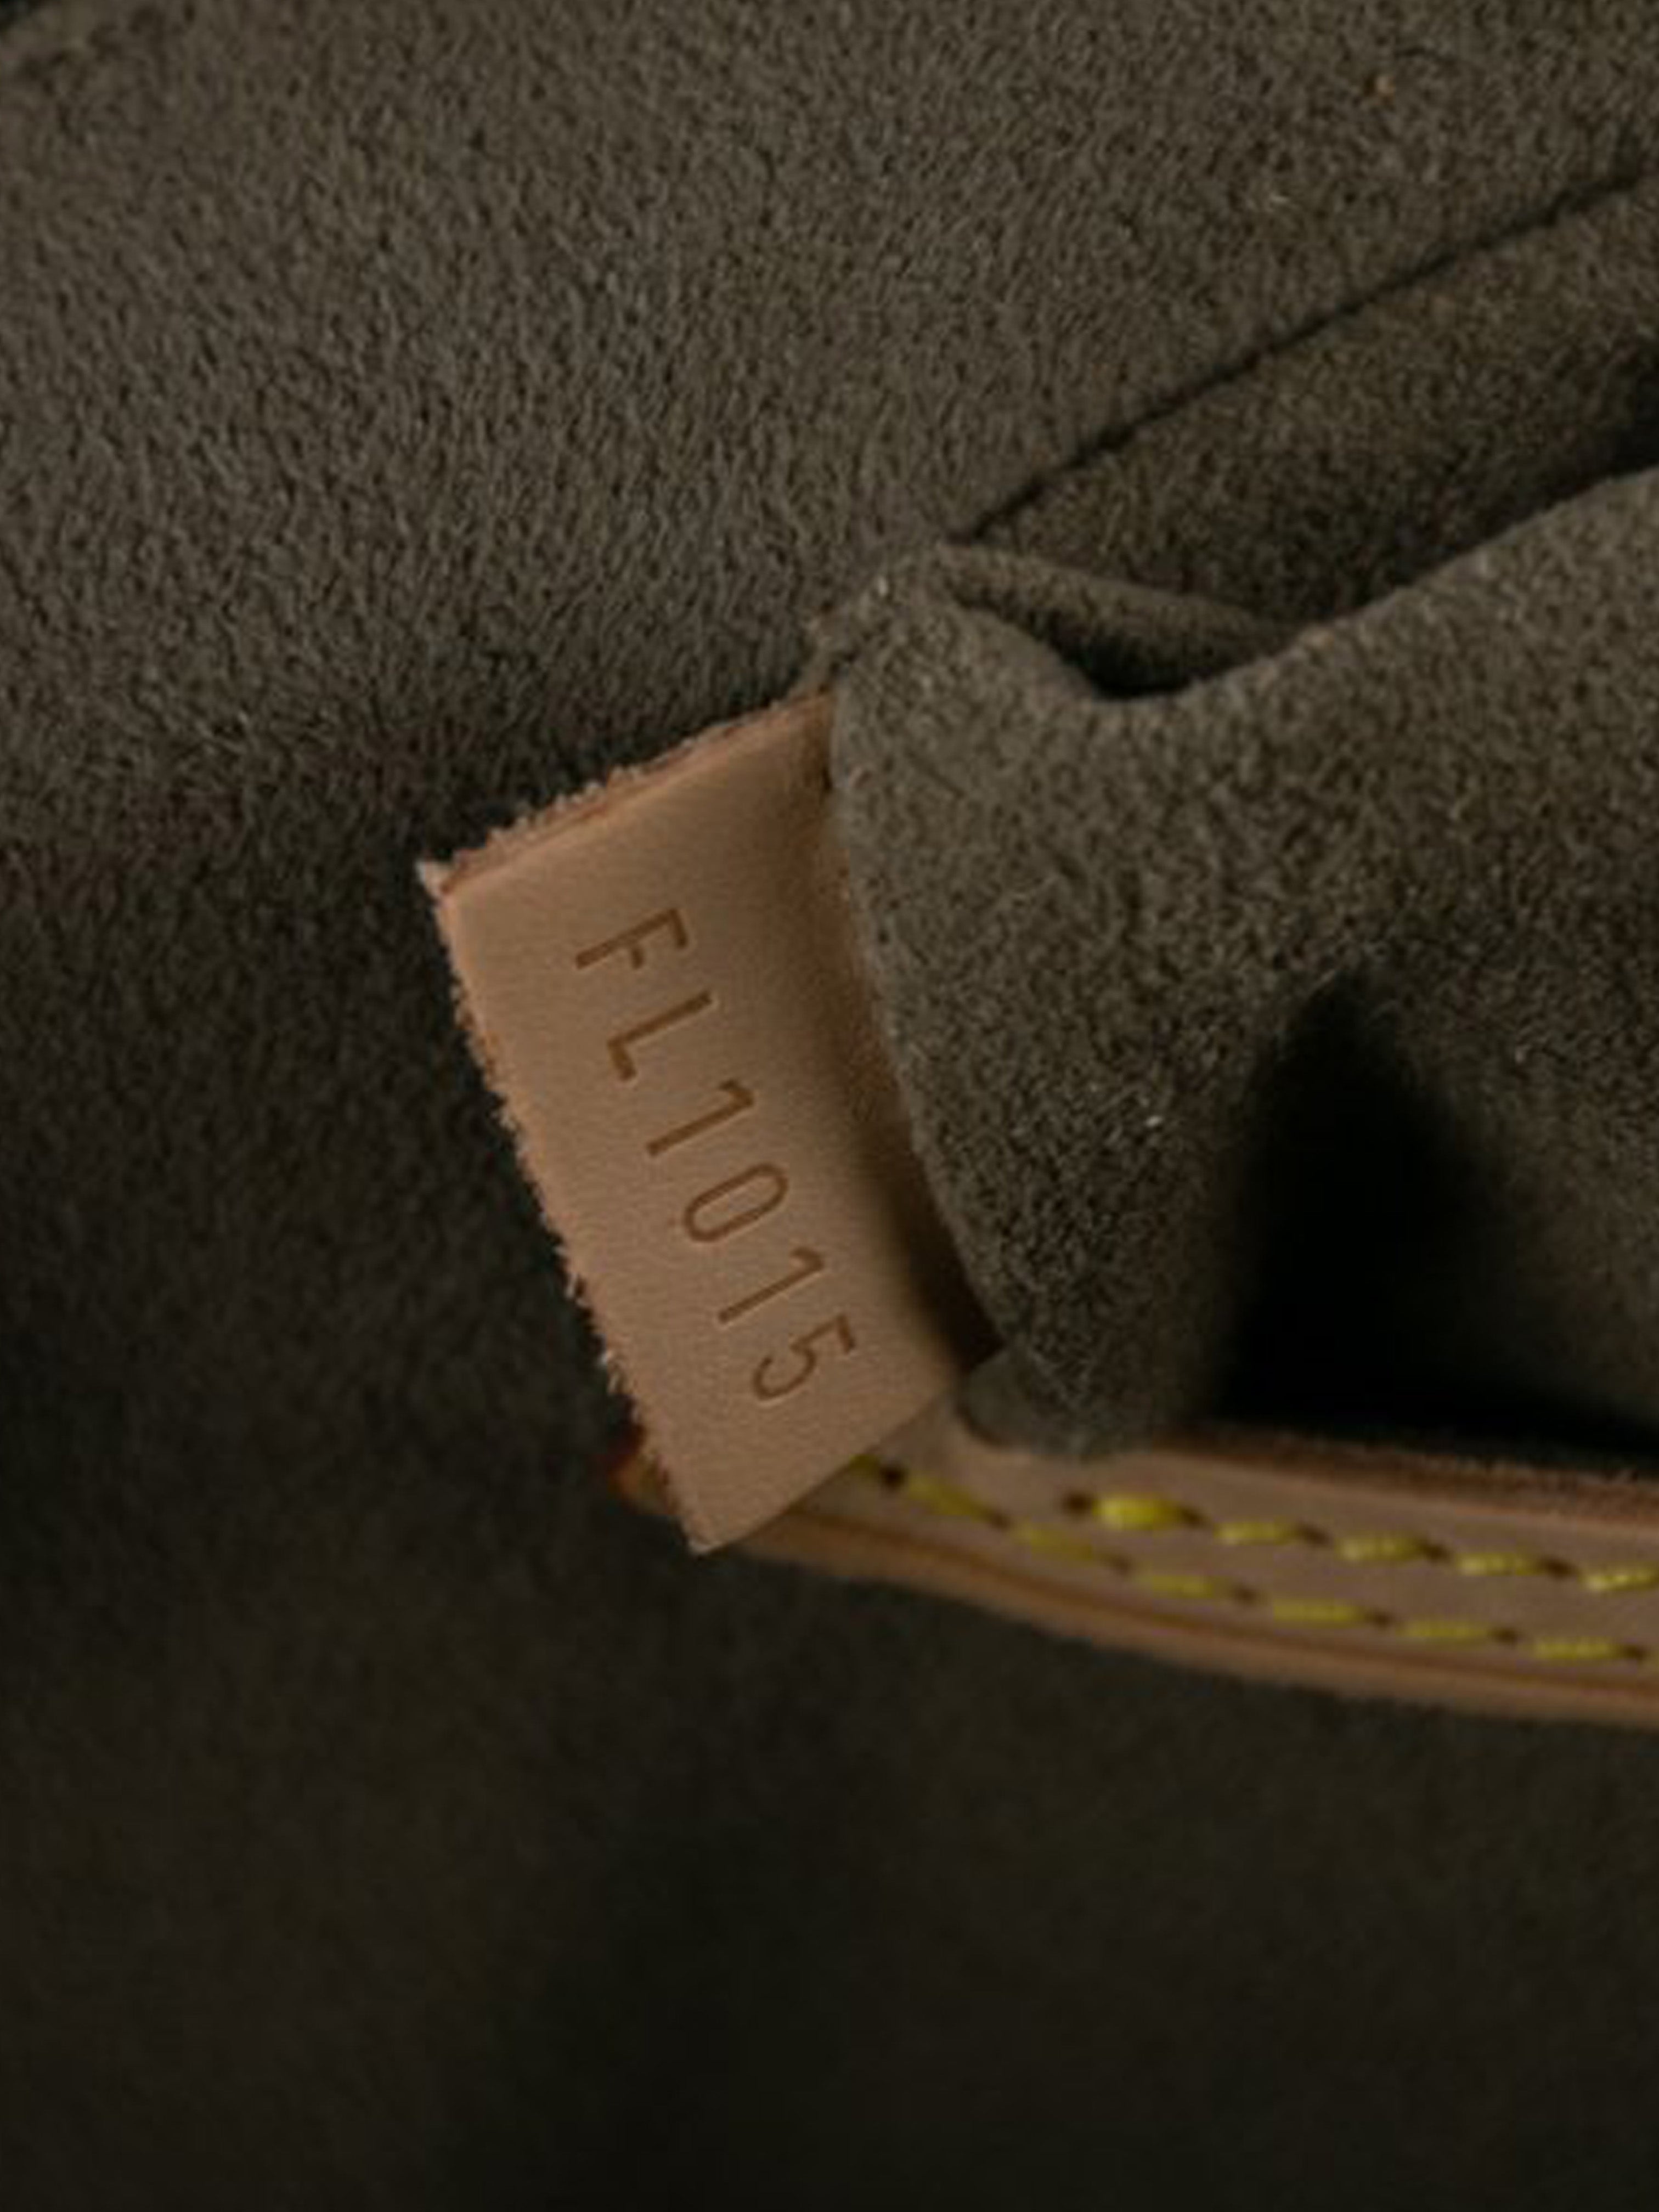 Louis Vuitton 2005 Pre-owned Monogram Multicolour Rift Crossbody Bag - Brown